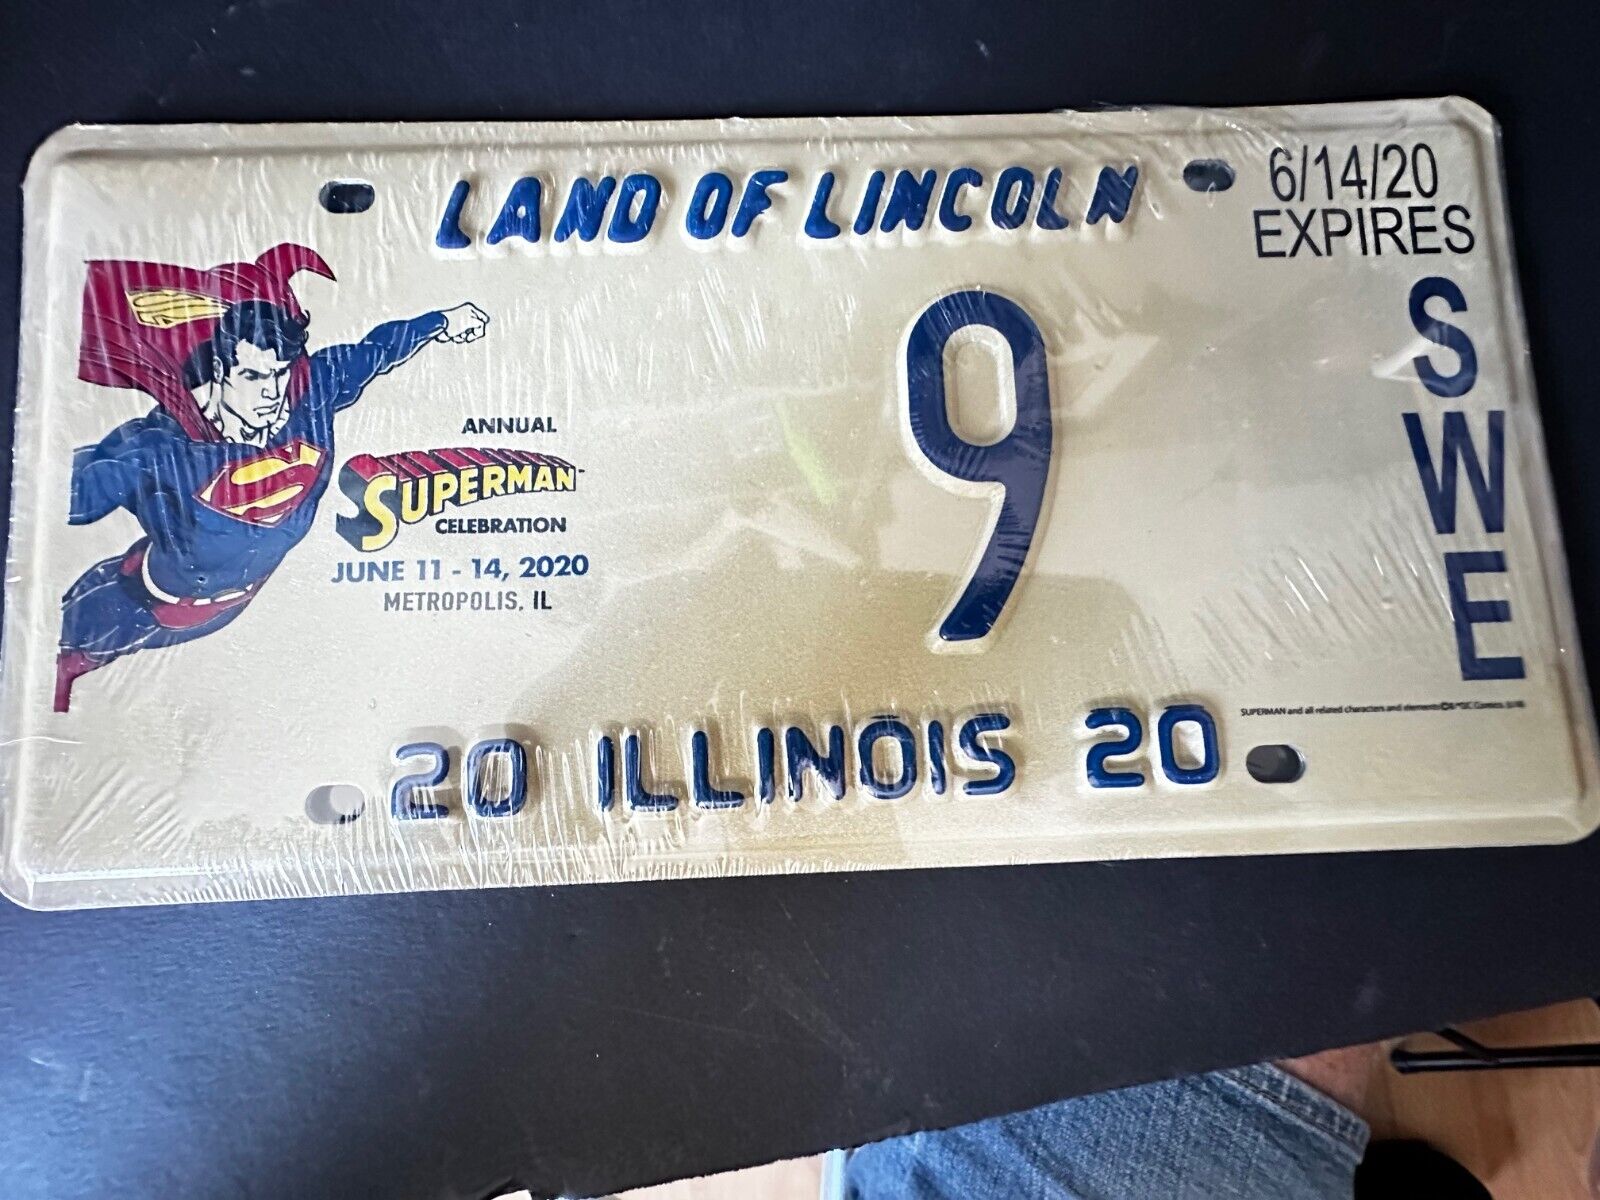 Illinois special event license plates Superman Celebration